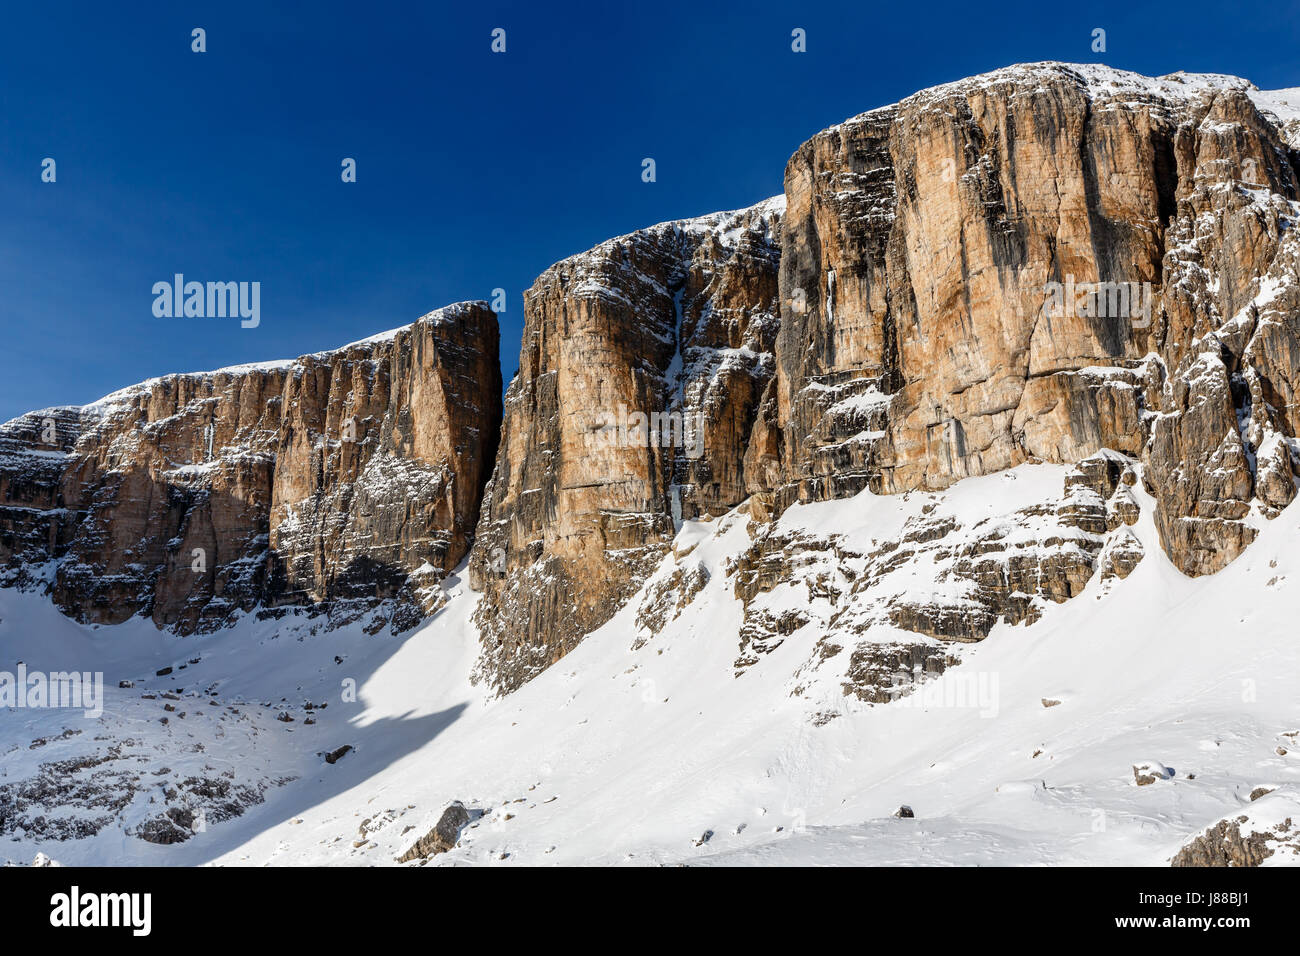 Peak of Vallon on the Skiing Resort of Corvara, Alta Badia, Dolomites Alps, Italy Stock Photo